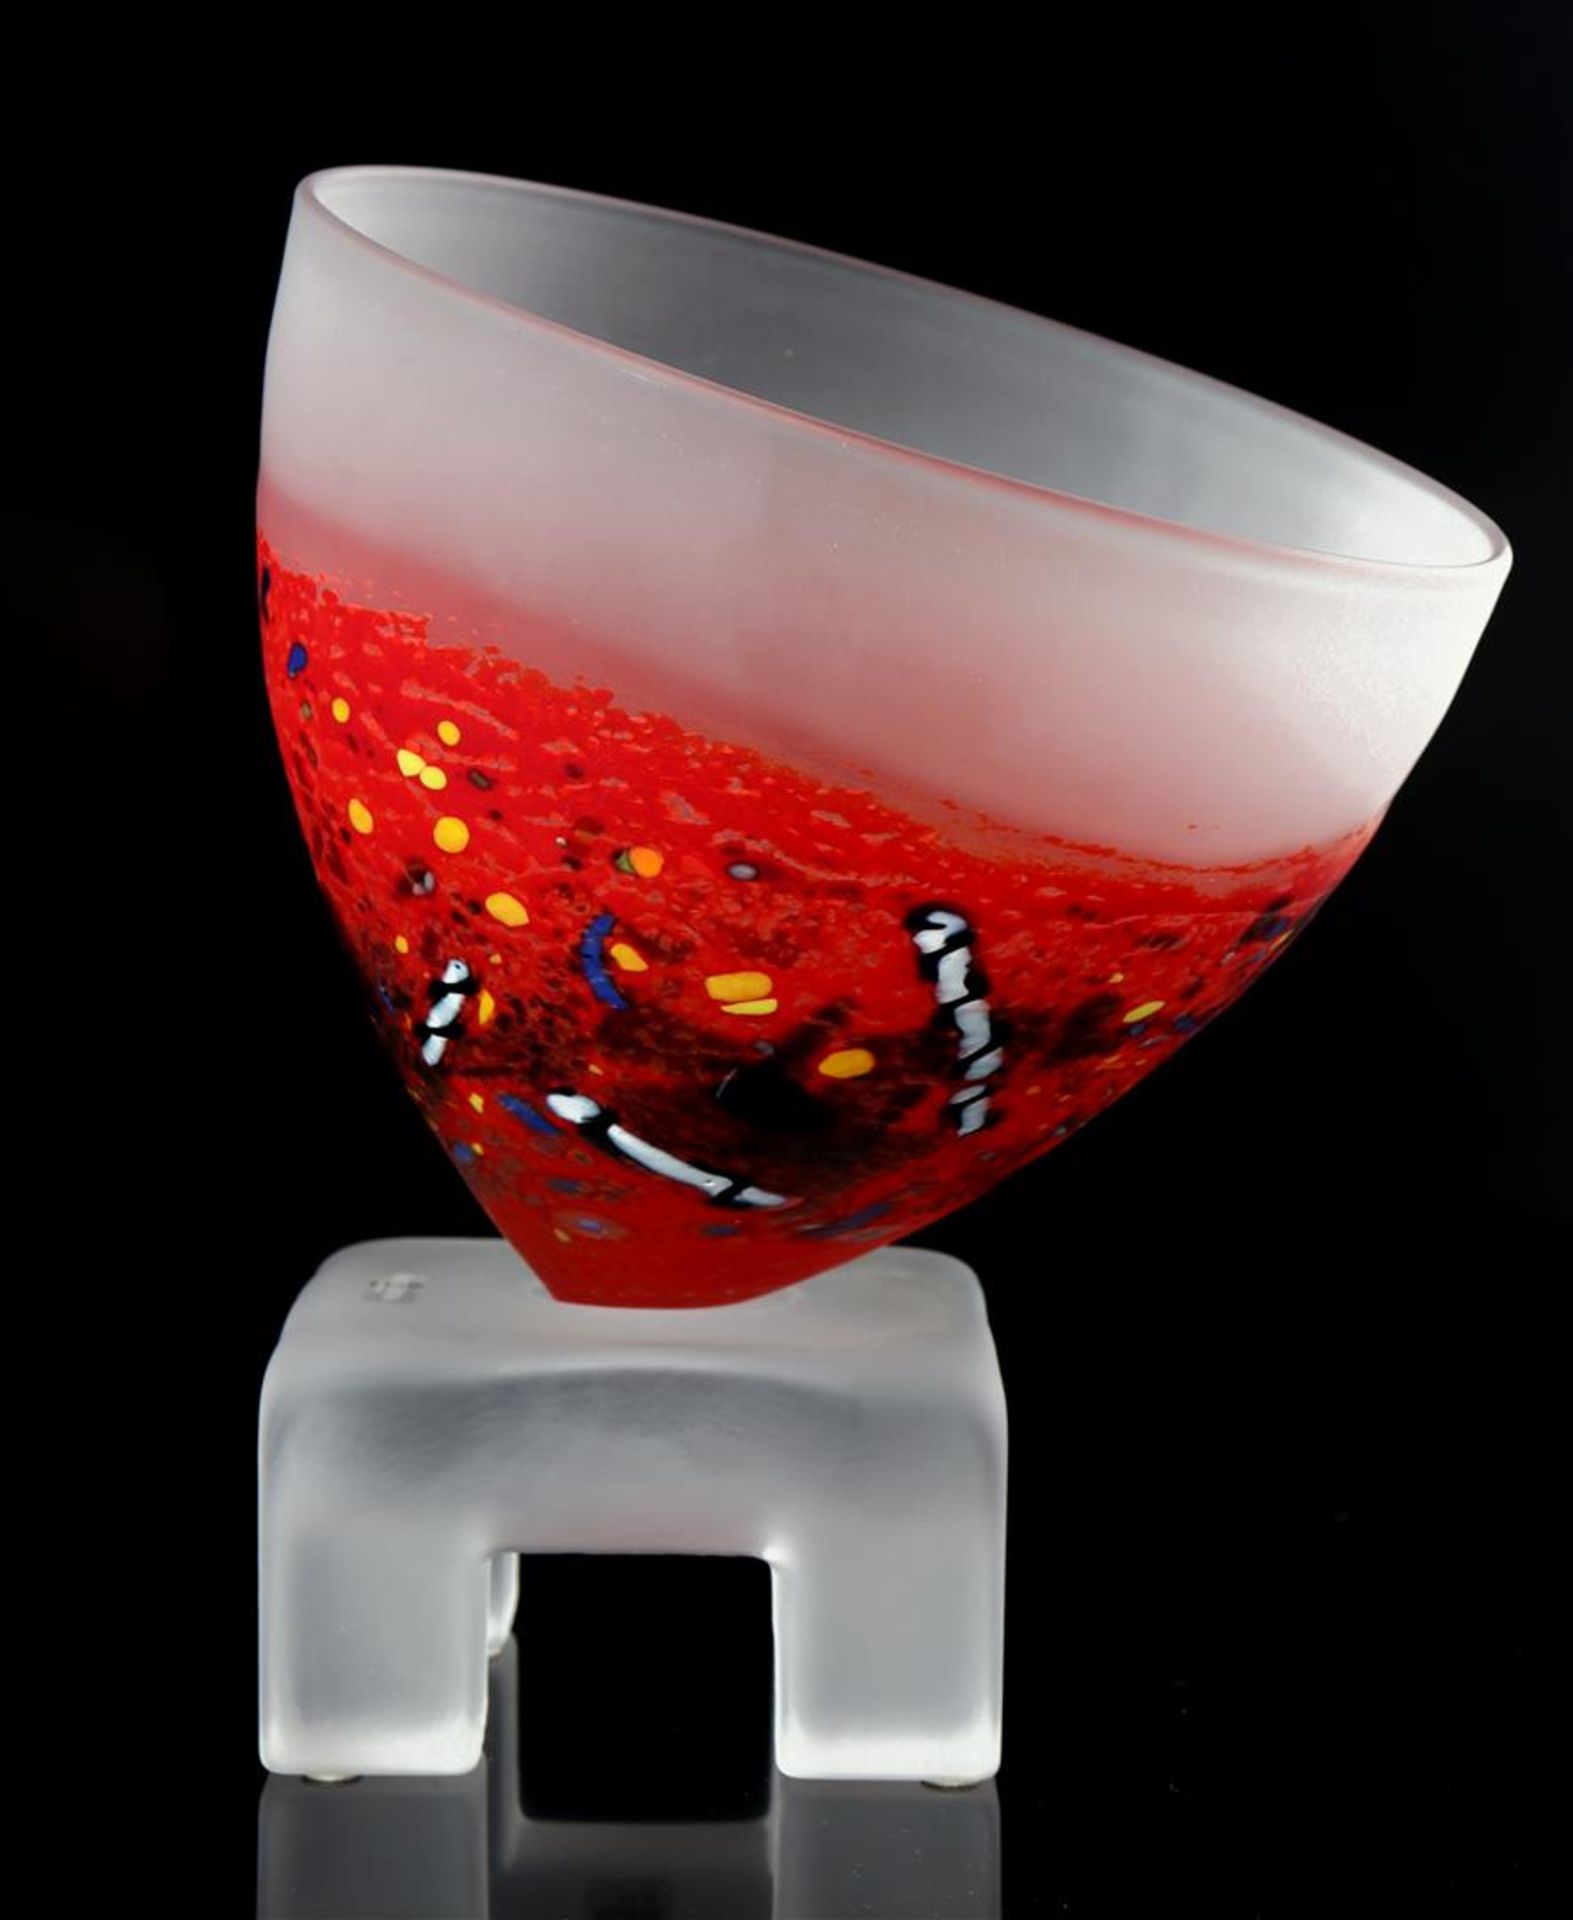 Glass decorative object